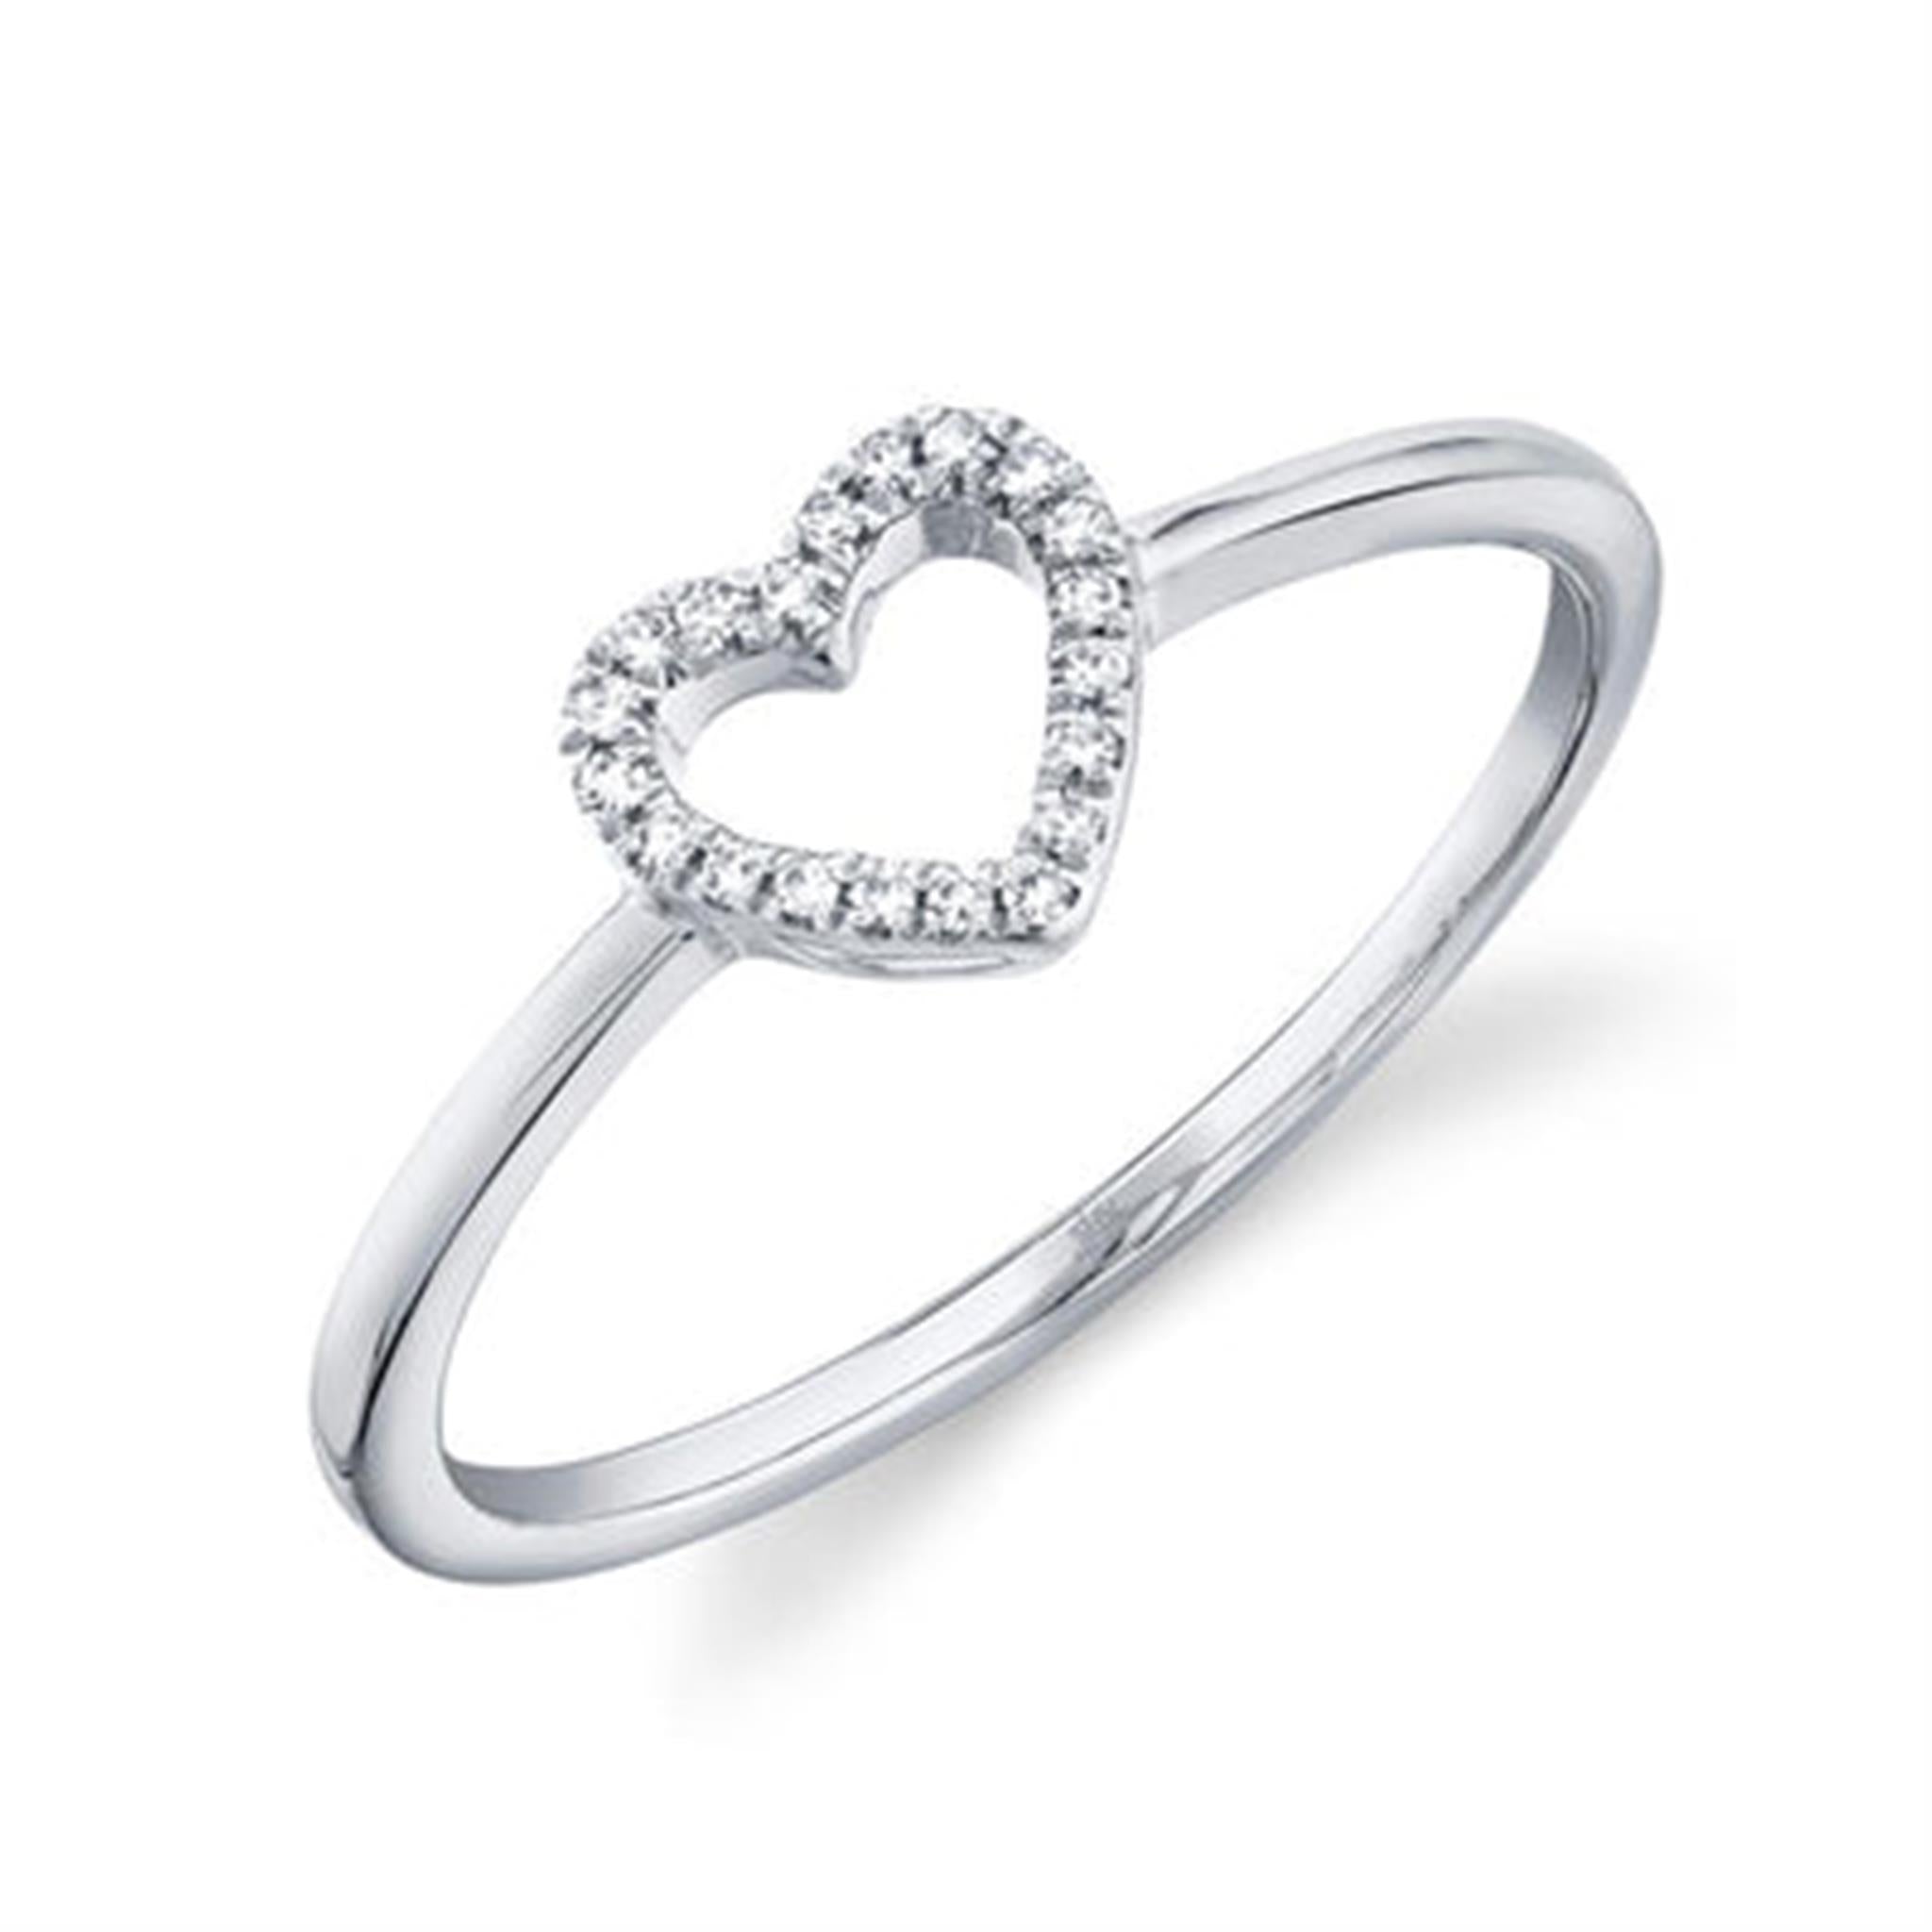 Dazzling Dual Heart Shaped Diamond Ring